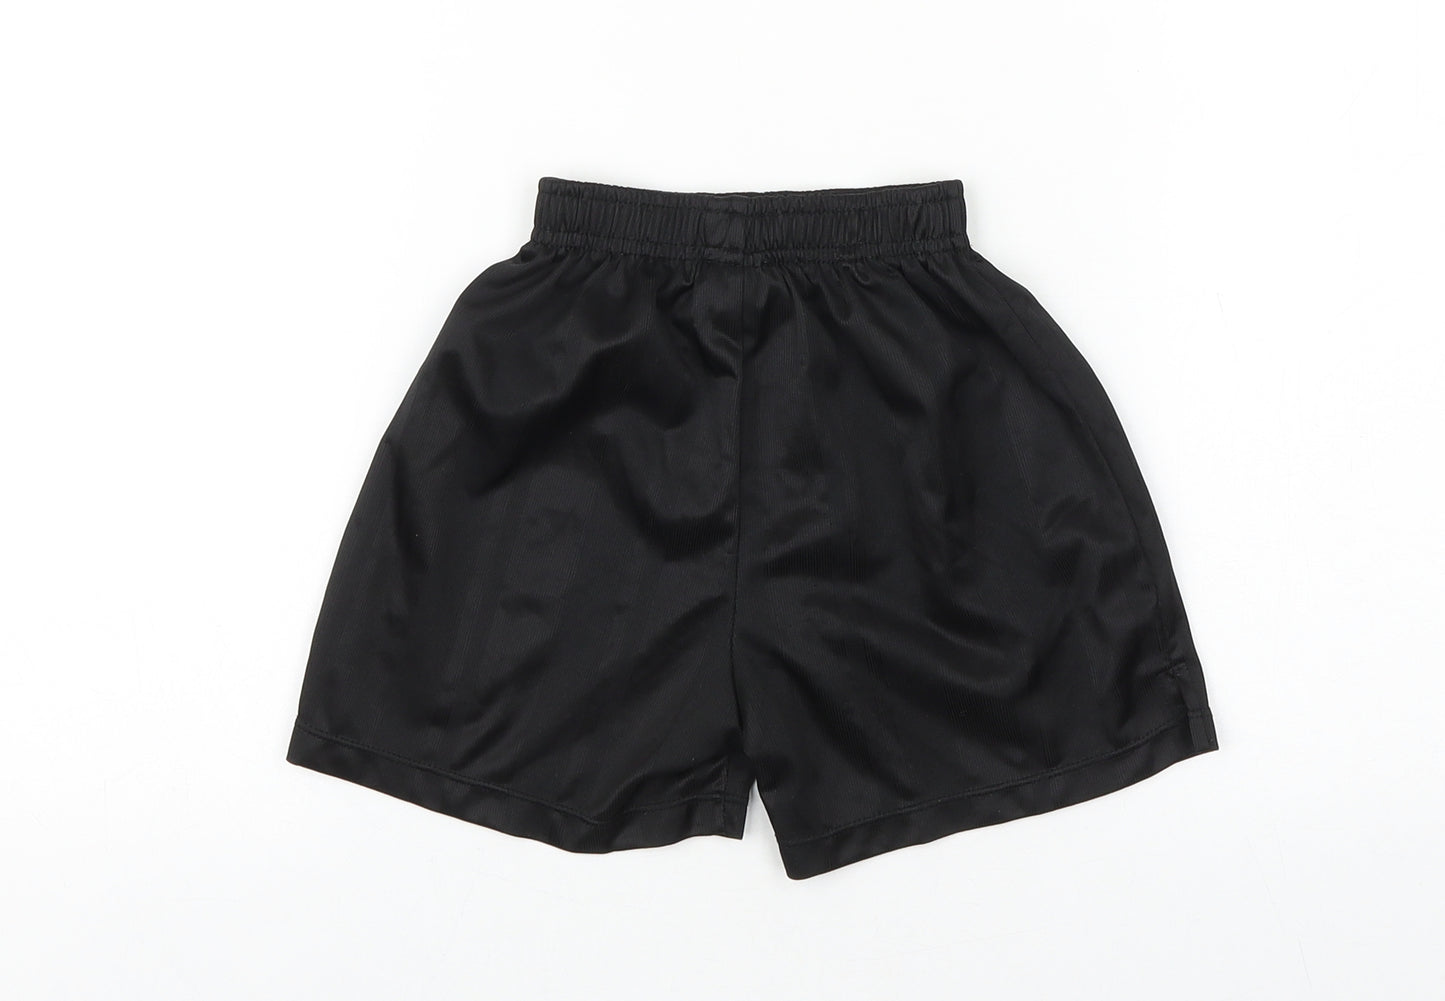 Sondico Boys Black Polyester Sweat Shorts Size 3-4 Years Regular